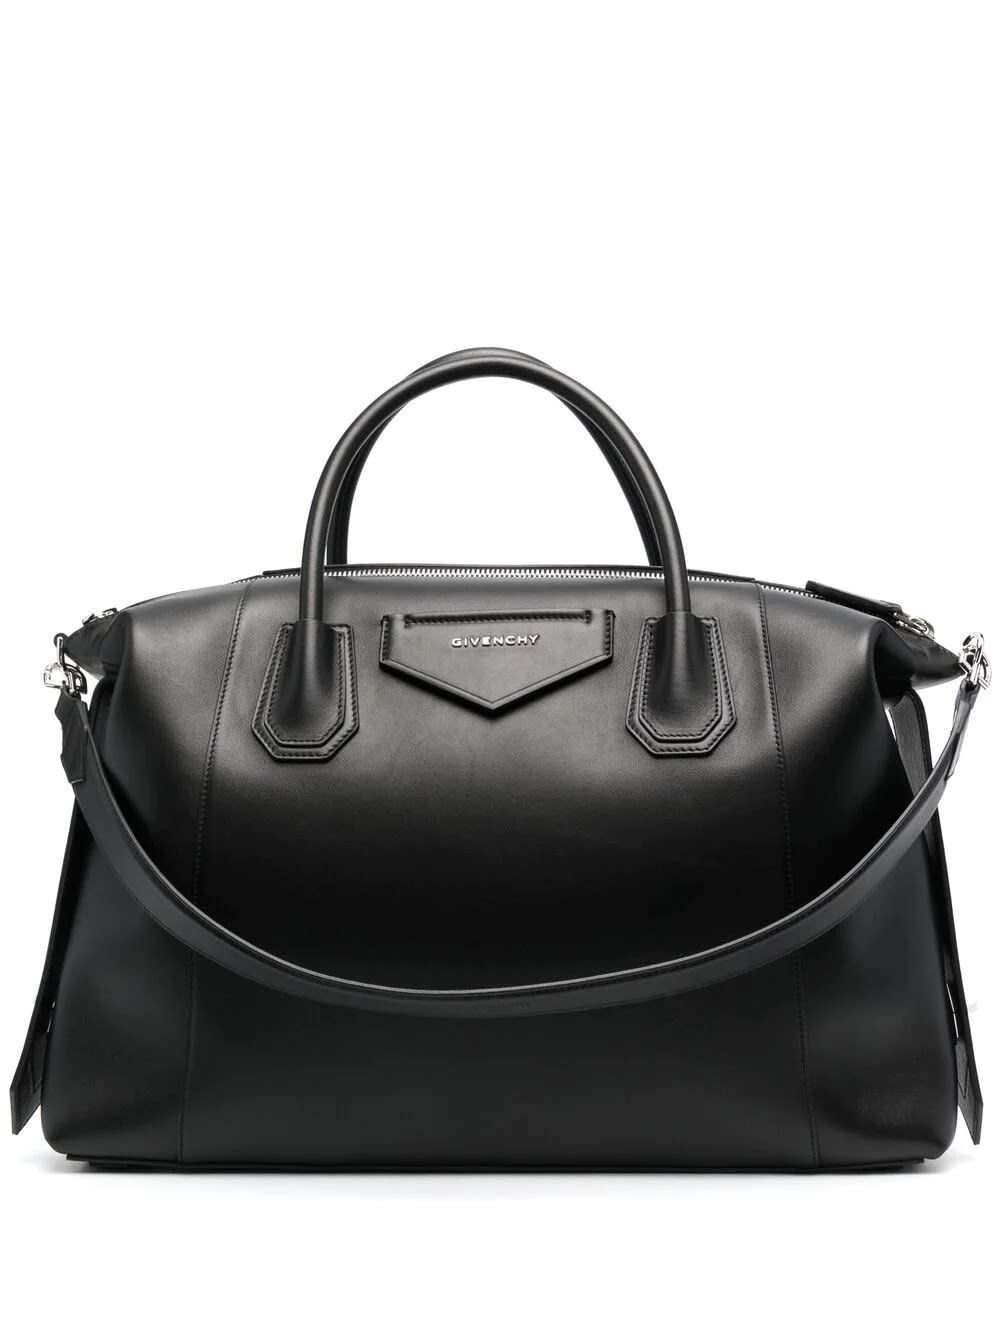 Givenchy Medium Soft Antigona Bag In Black Smooth Leather